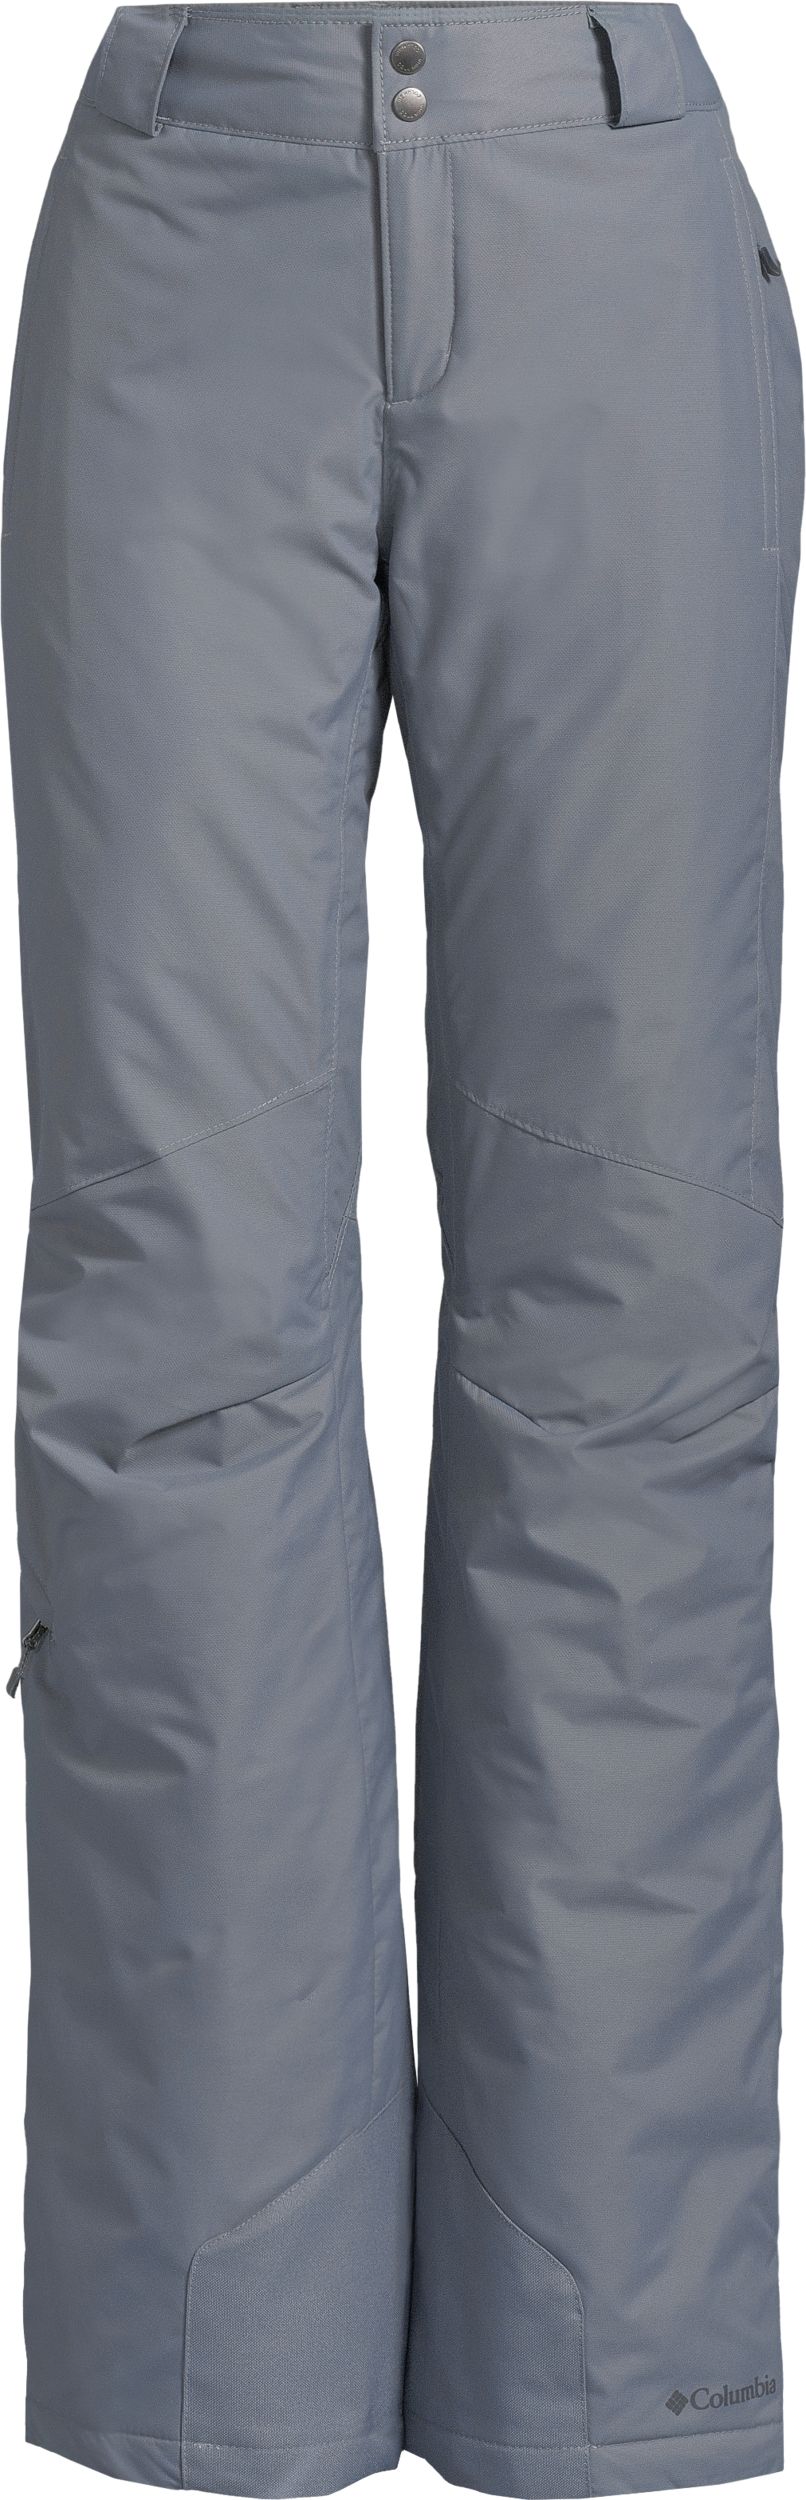 Womens Bugaboo OmniHeat Insulated Ski Pants  Plus Size  Columbia  Sportswear